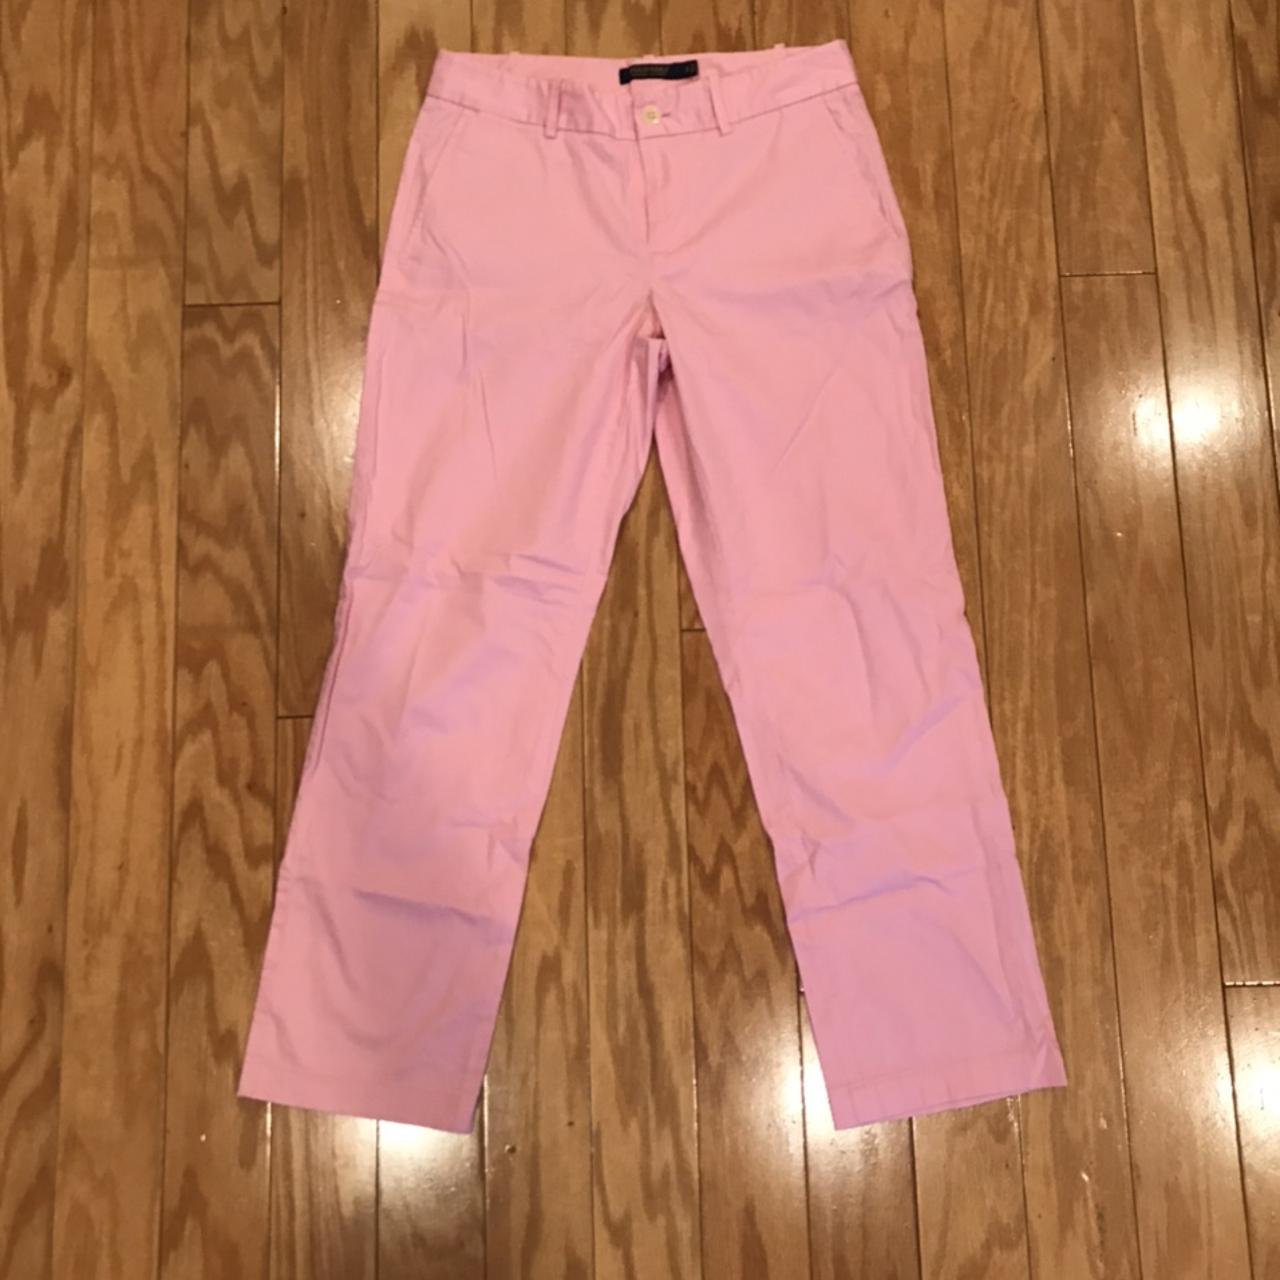 Polo Ralph Lauren Women's Pants Size 2